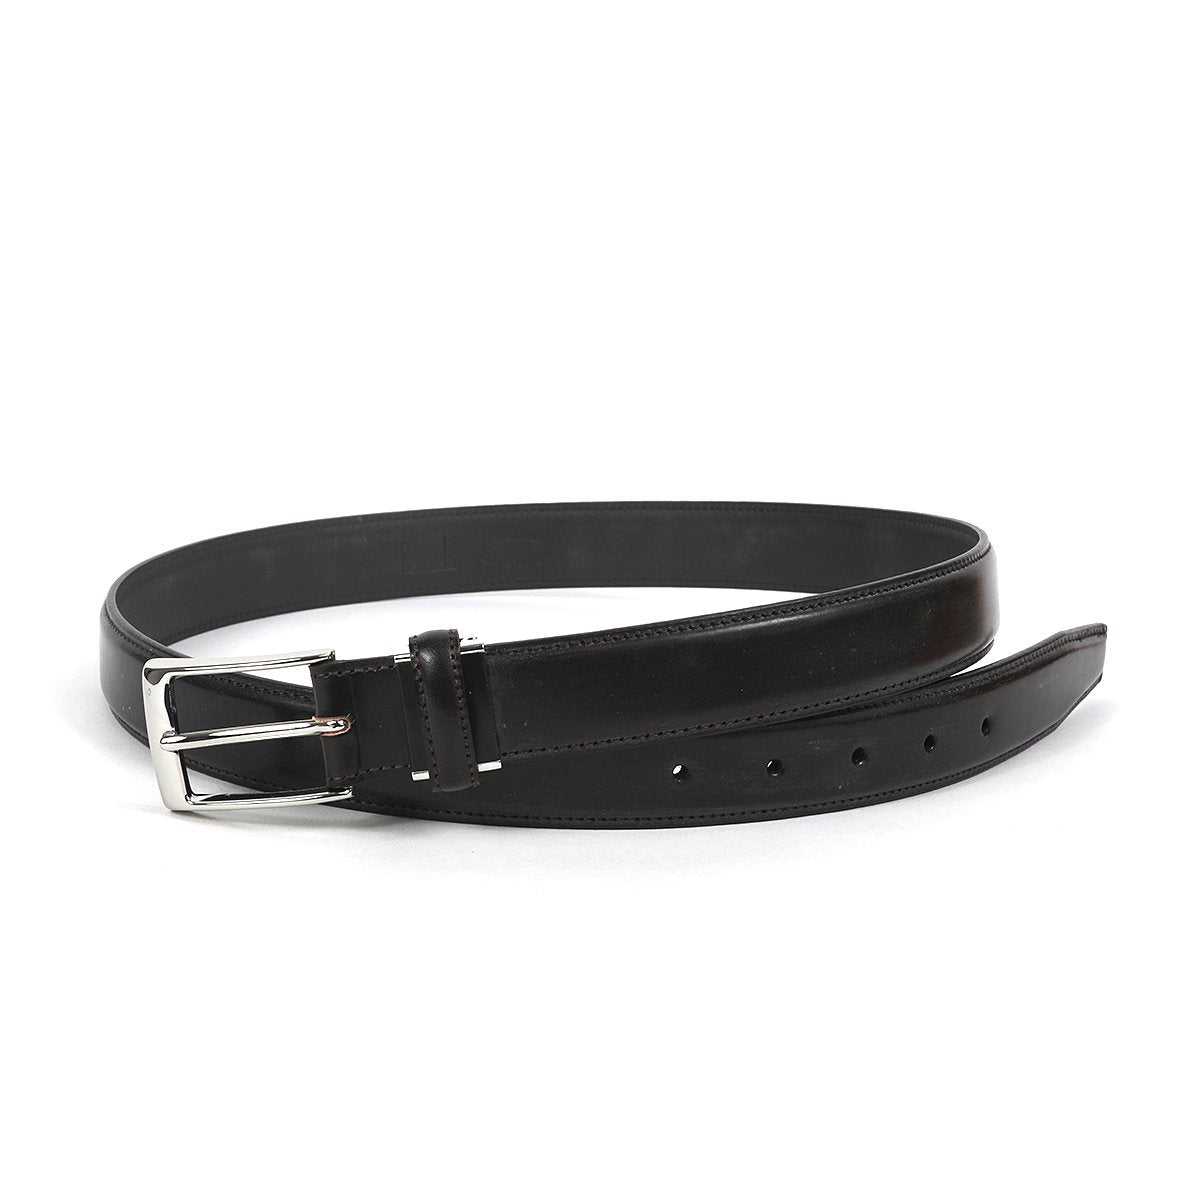 Japanese Leather Belt 30mm Bridle Leather Italian Leather Belt